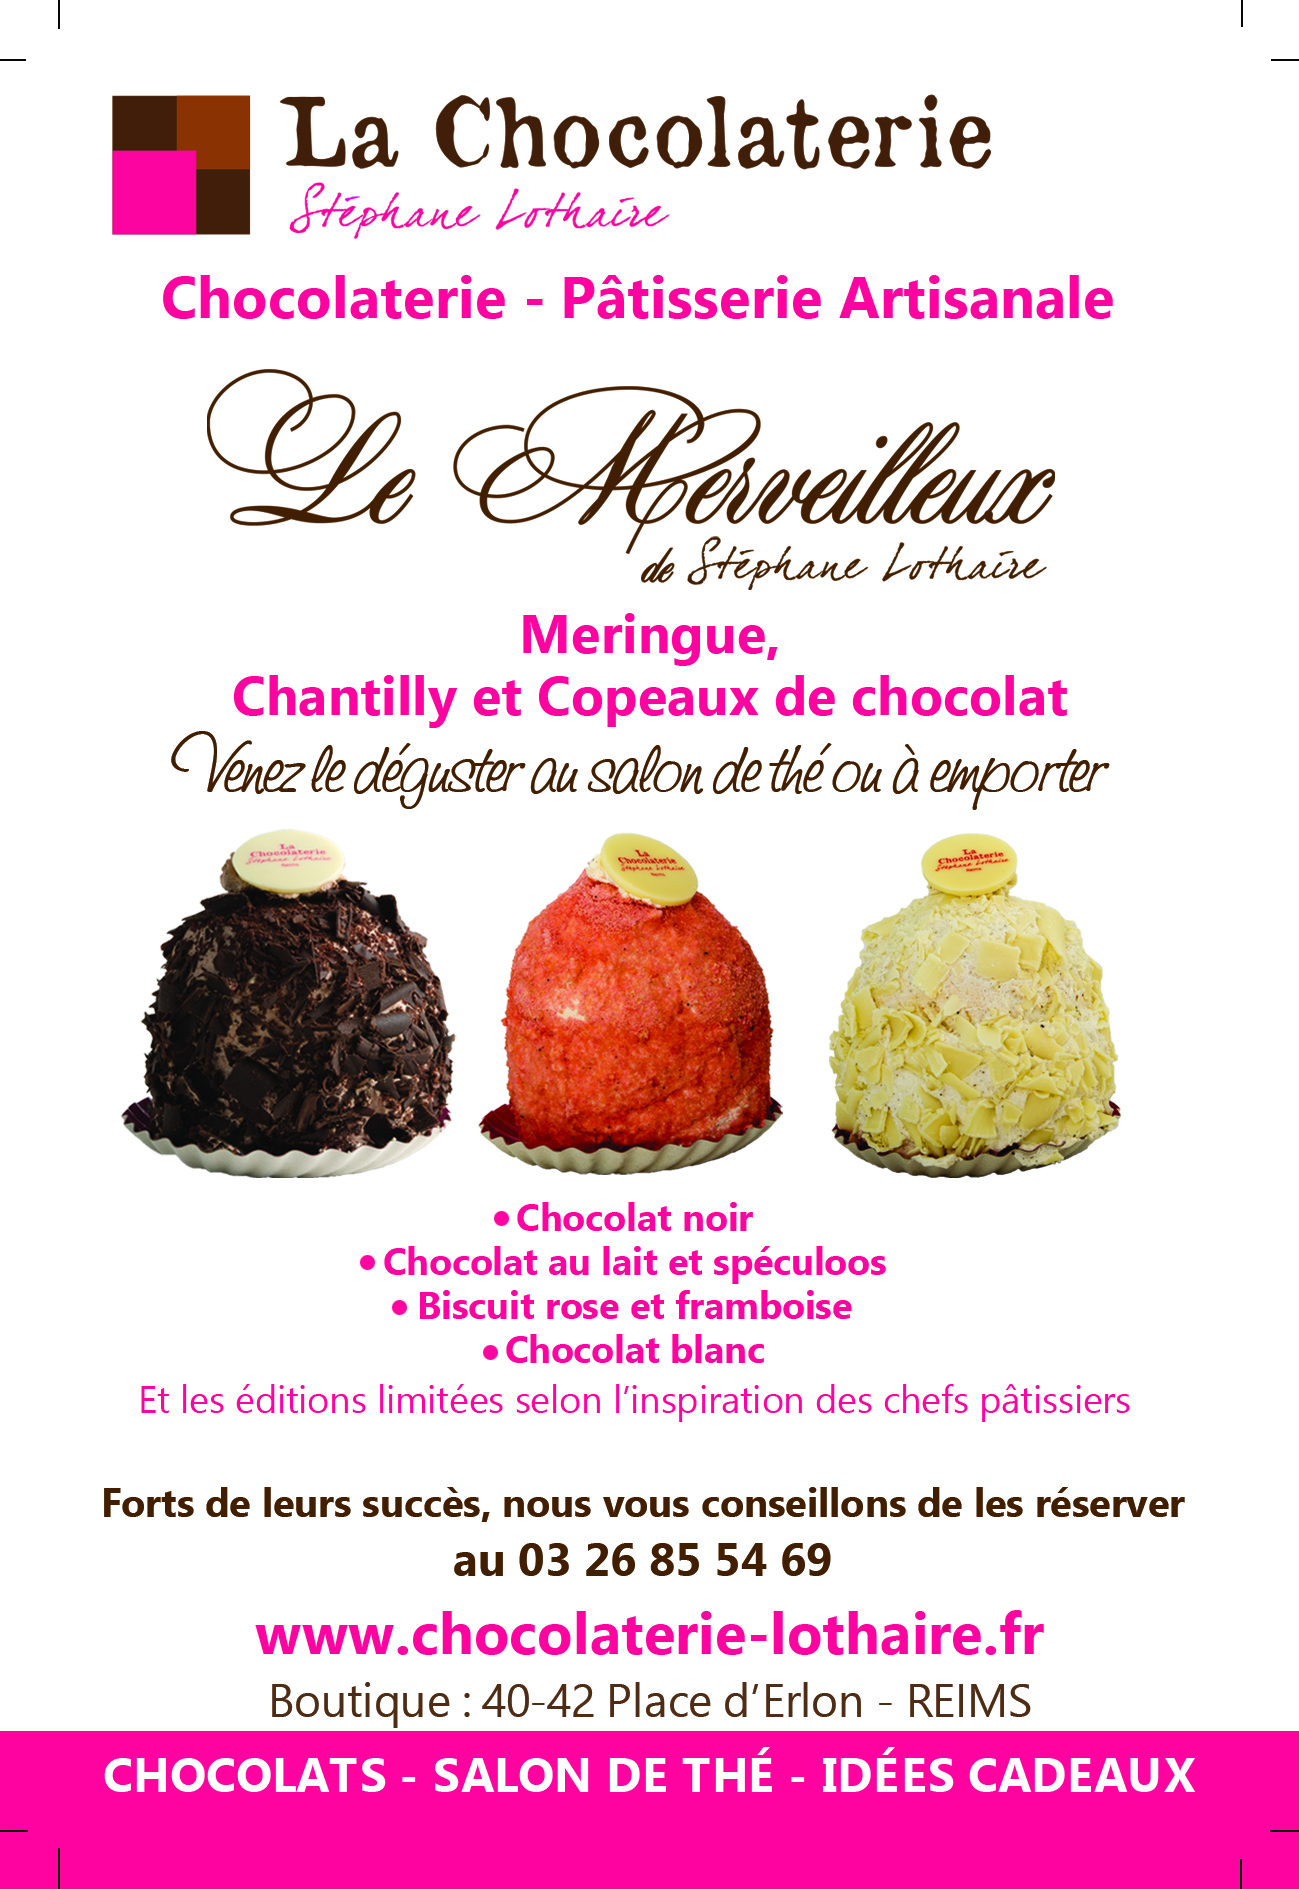 Merveilleux - Chocolaterie Lothaire - Flyer recto